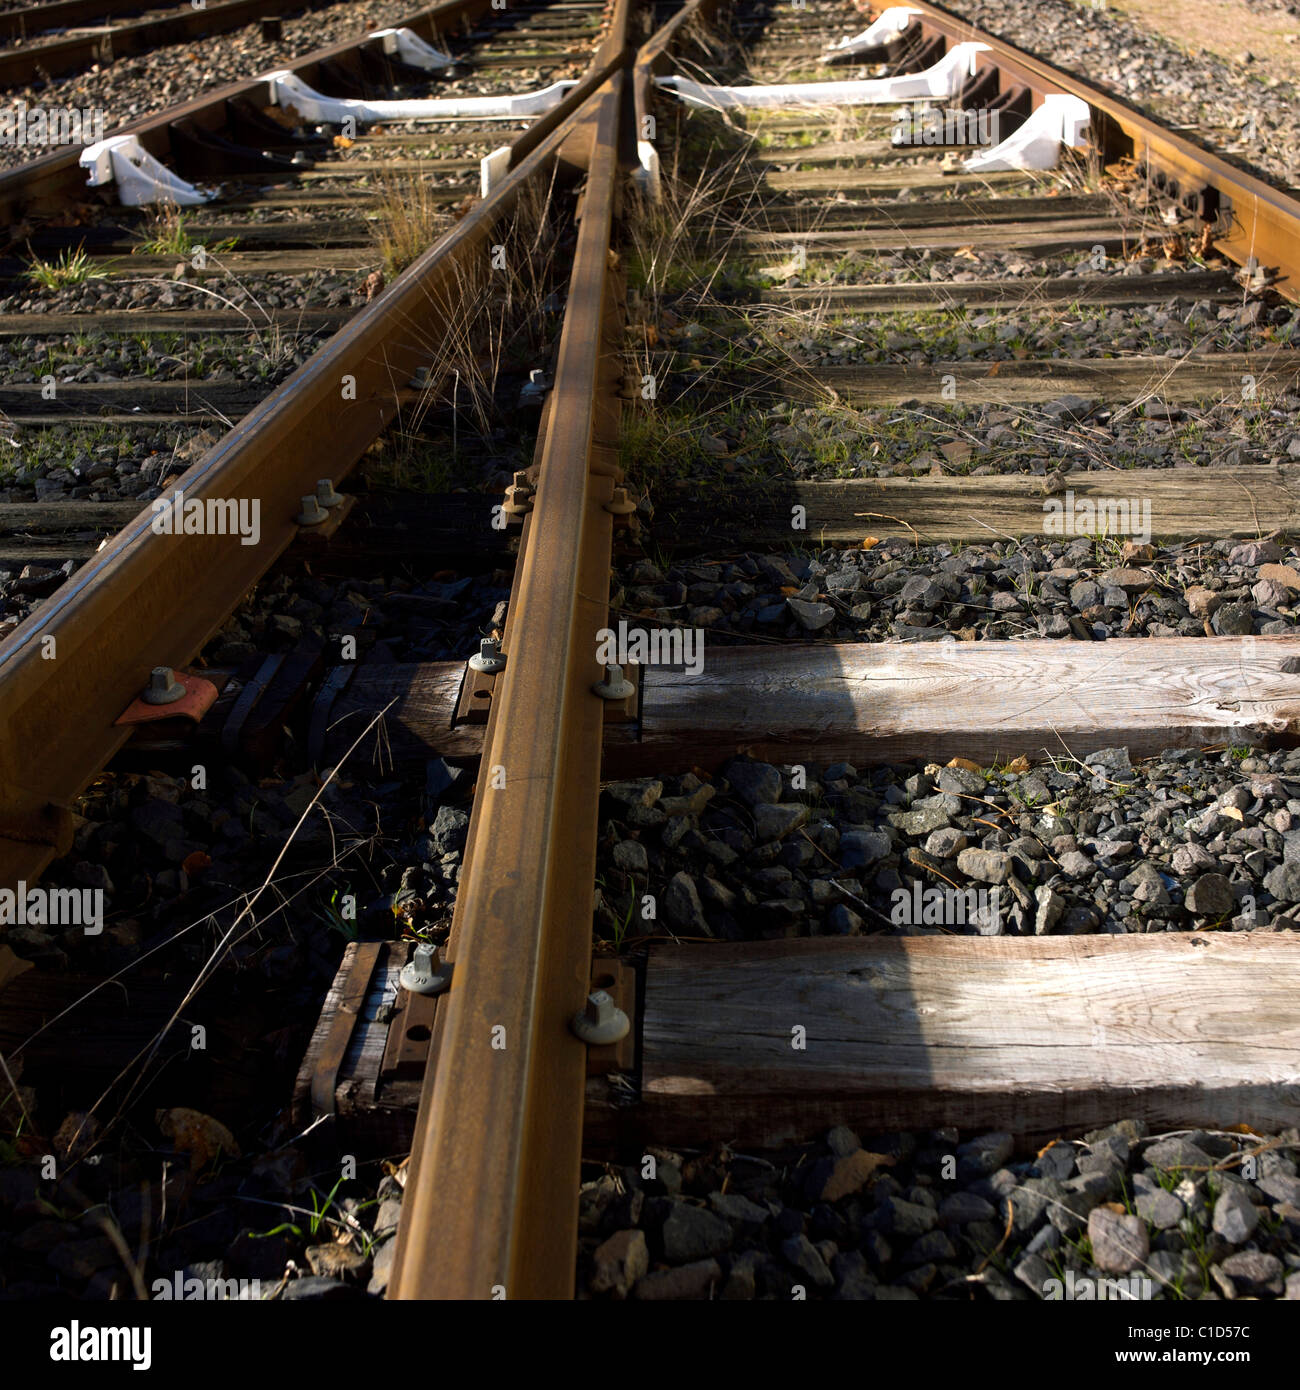 Railway track train tracks close up Stock Photo